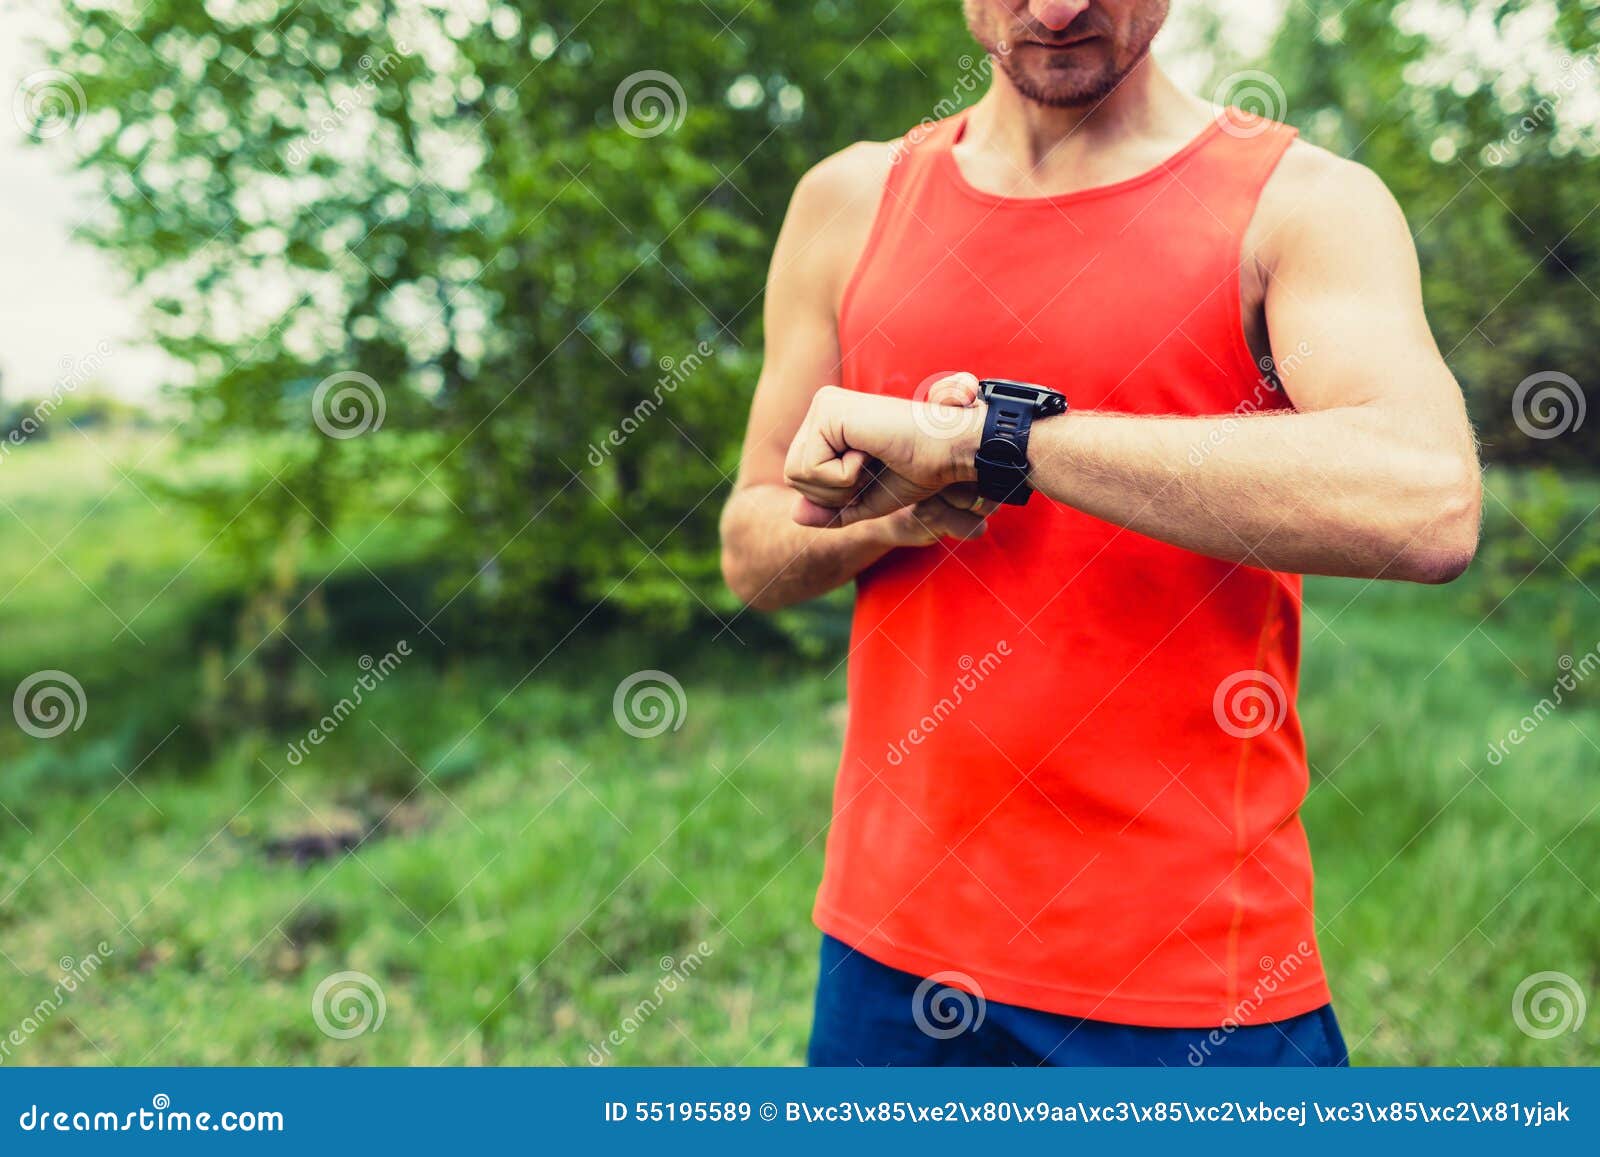 runner looking at sport smart gps watch